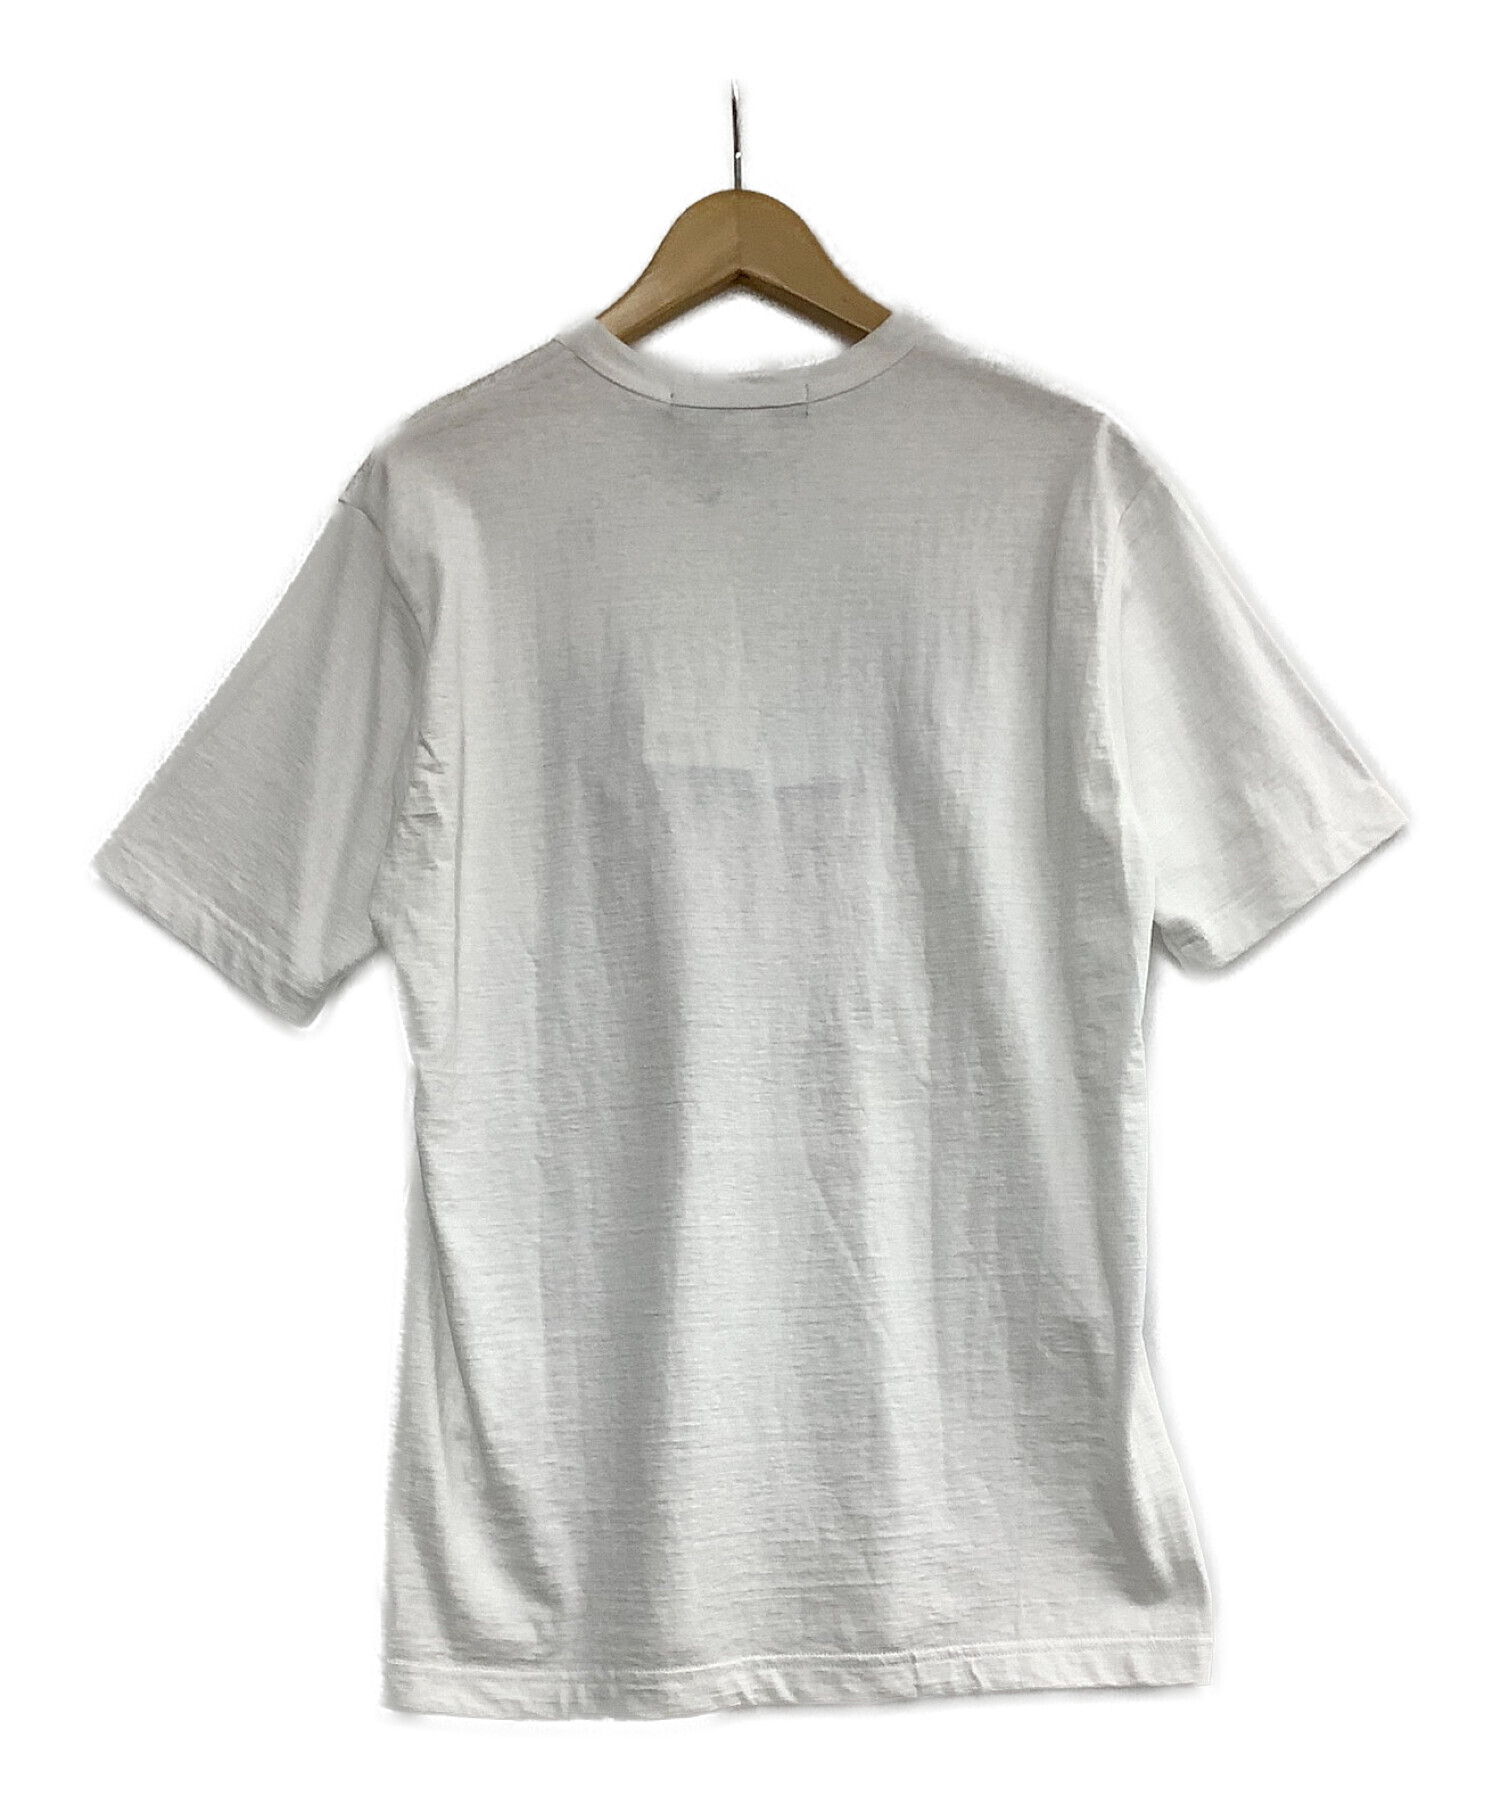 COMME des GARCONS JUNYA WATANABE MAN (コムデギャルソンジュンヤワタナベマン) 半袖Tシャツ ホワイト サイズ:S  未使用品